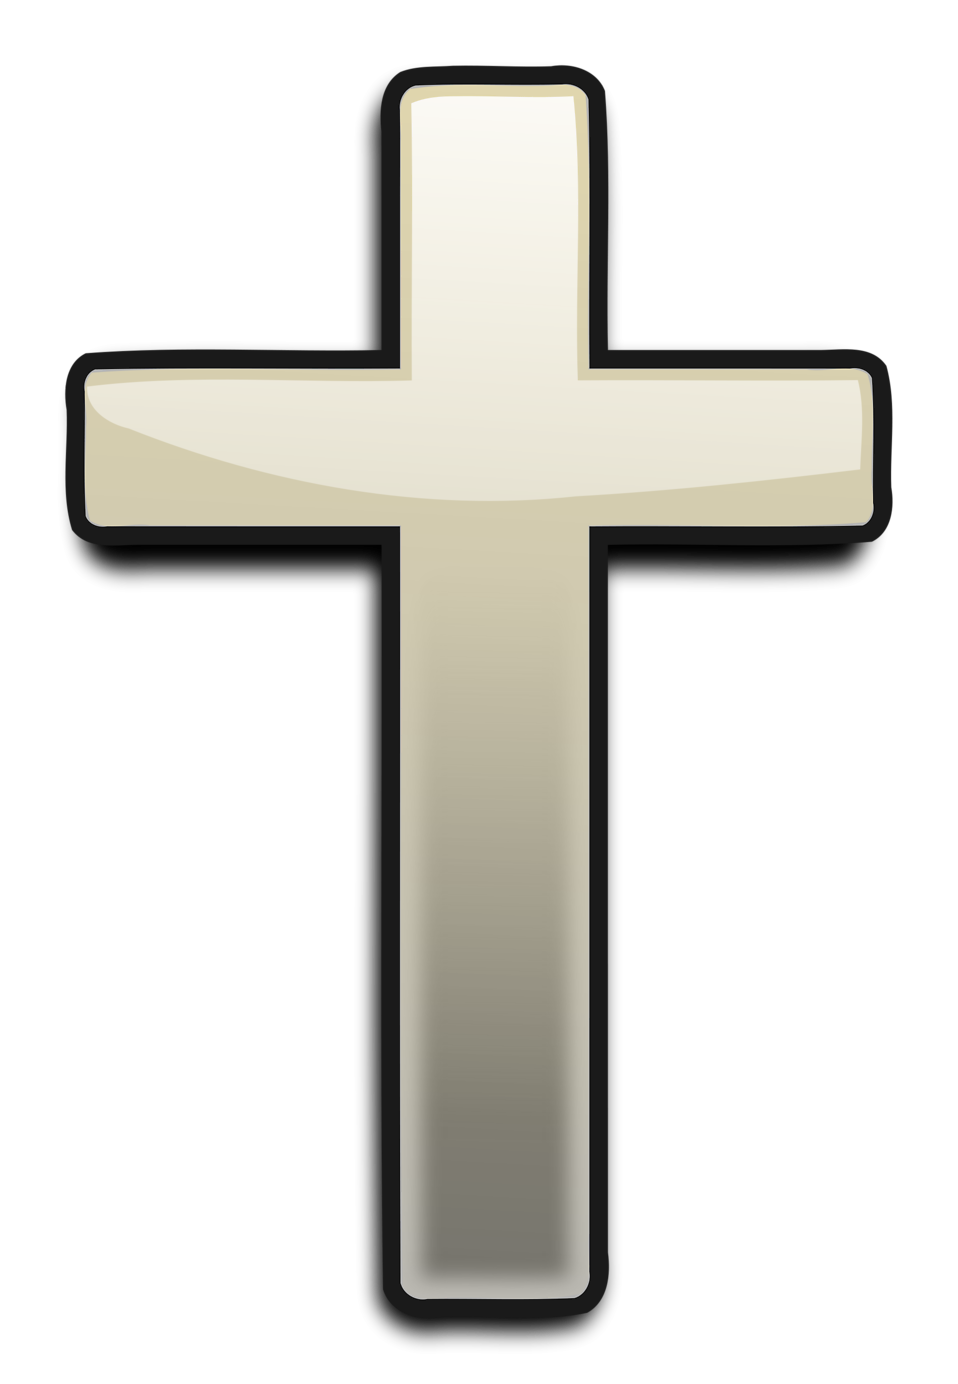 Cross   Free Stock Photo   Illustration Of A White Cross     16546